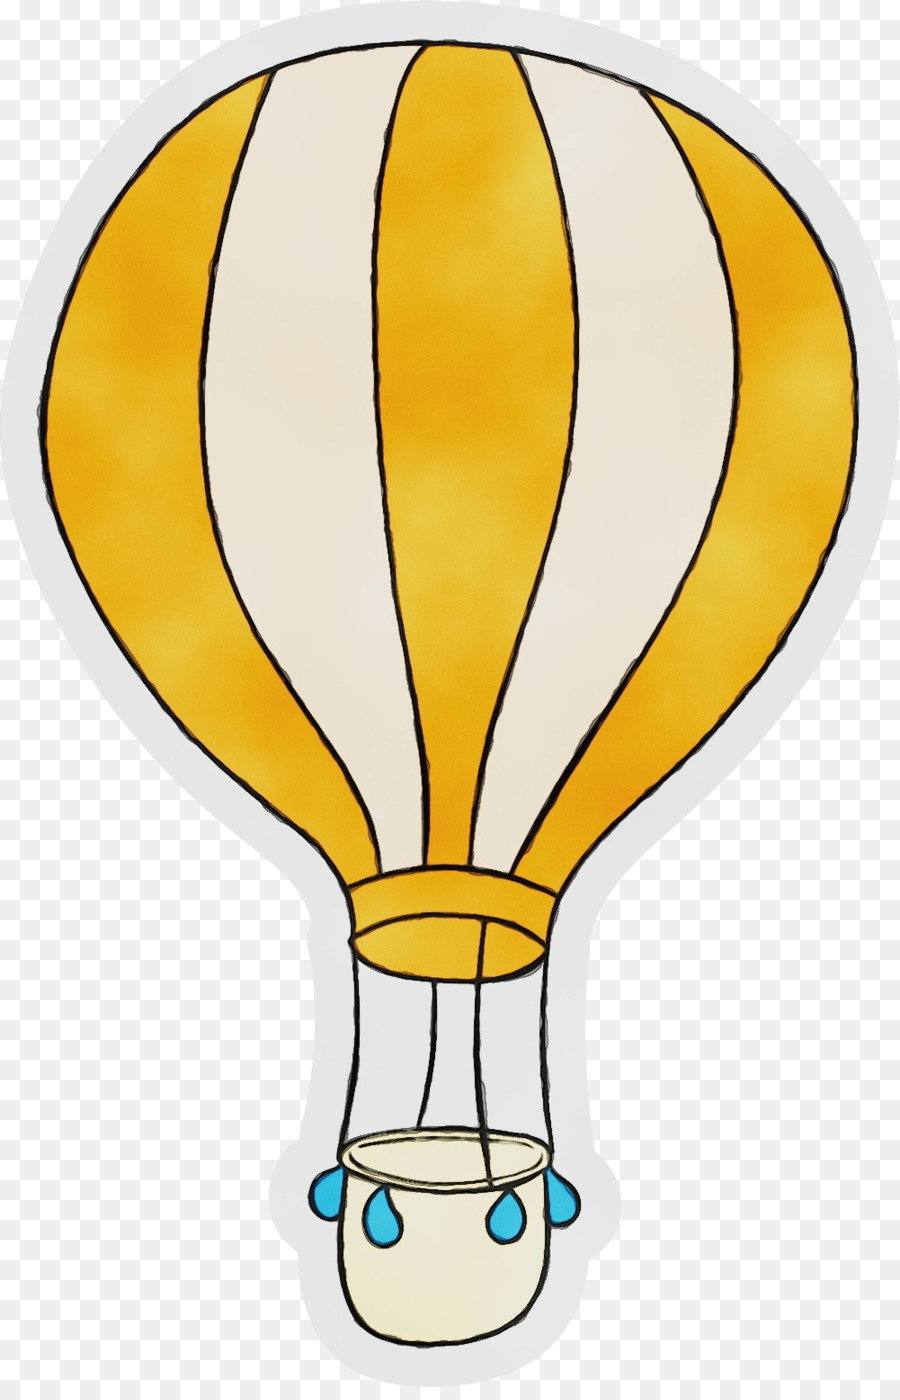 Hot Air Balloon Watercolor